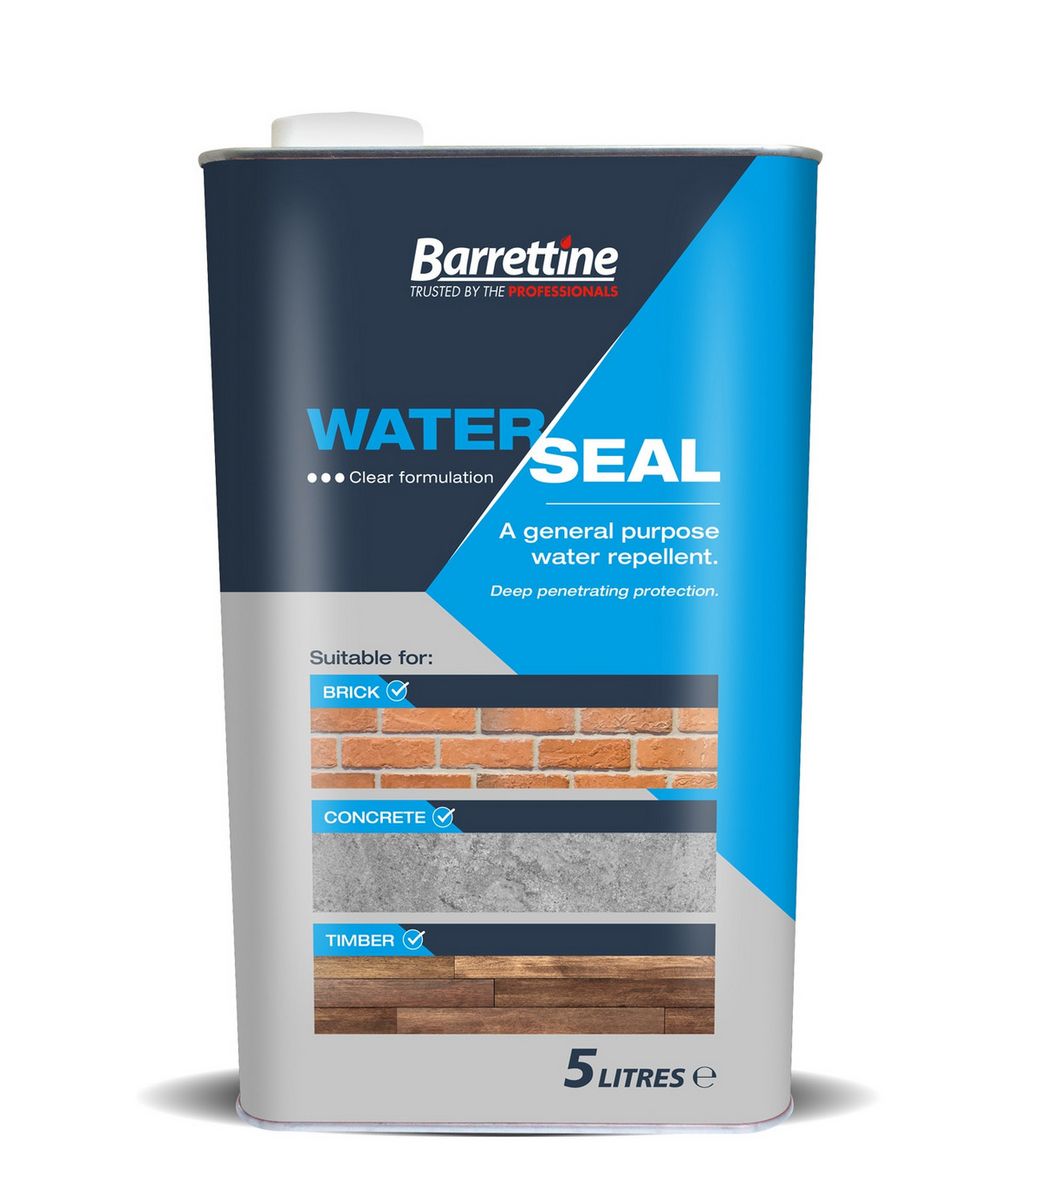 Barretine Waterseal 2018 1500x1300.jpg